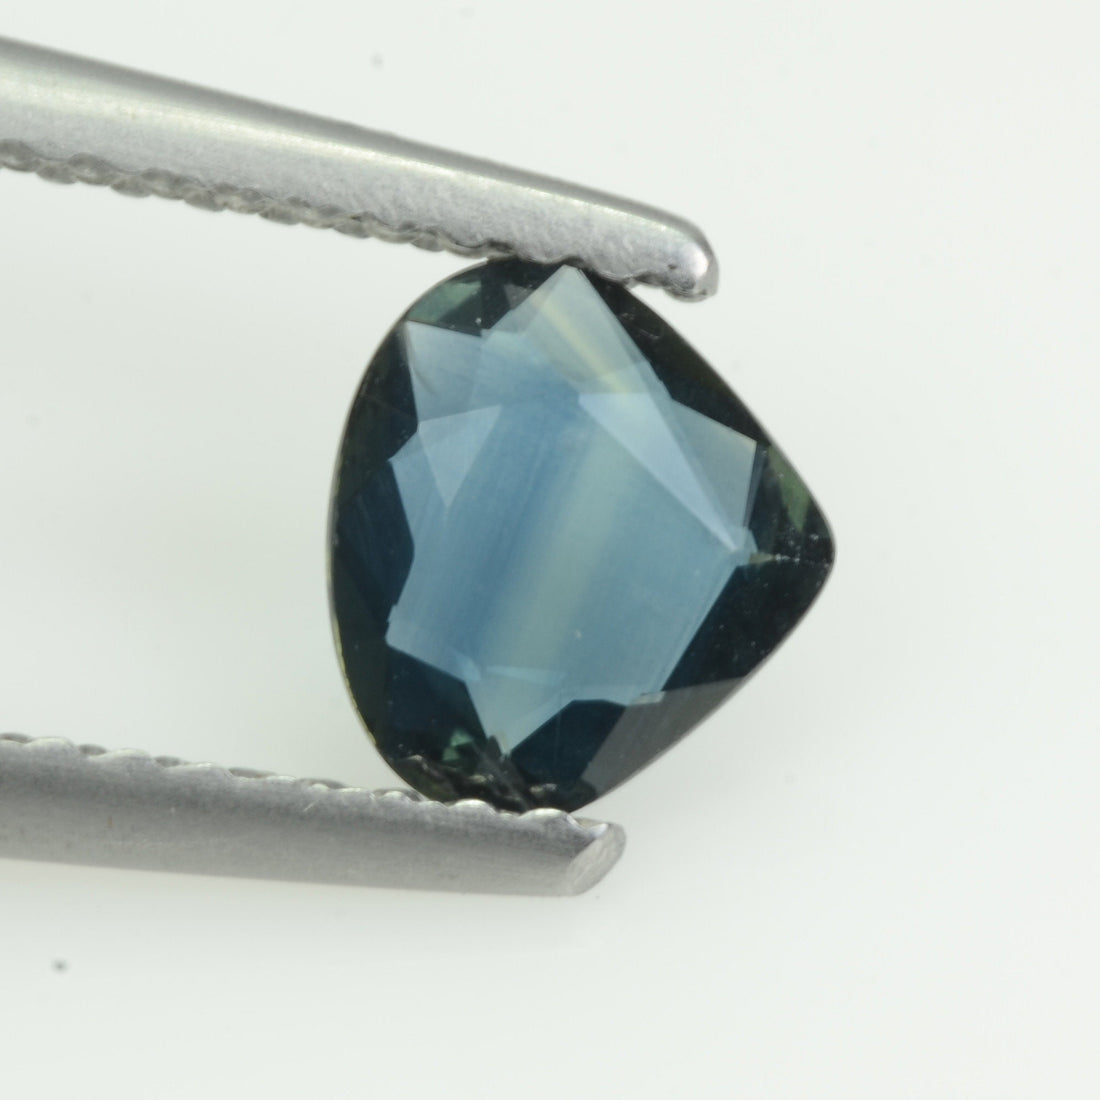 0.56 cts Natural Teal Blue Sapphire Loose Gemstone Pear Cut